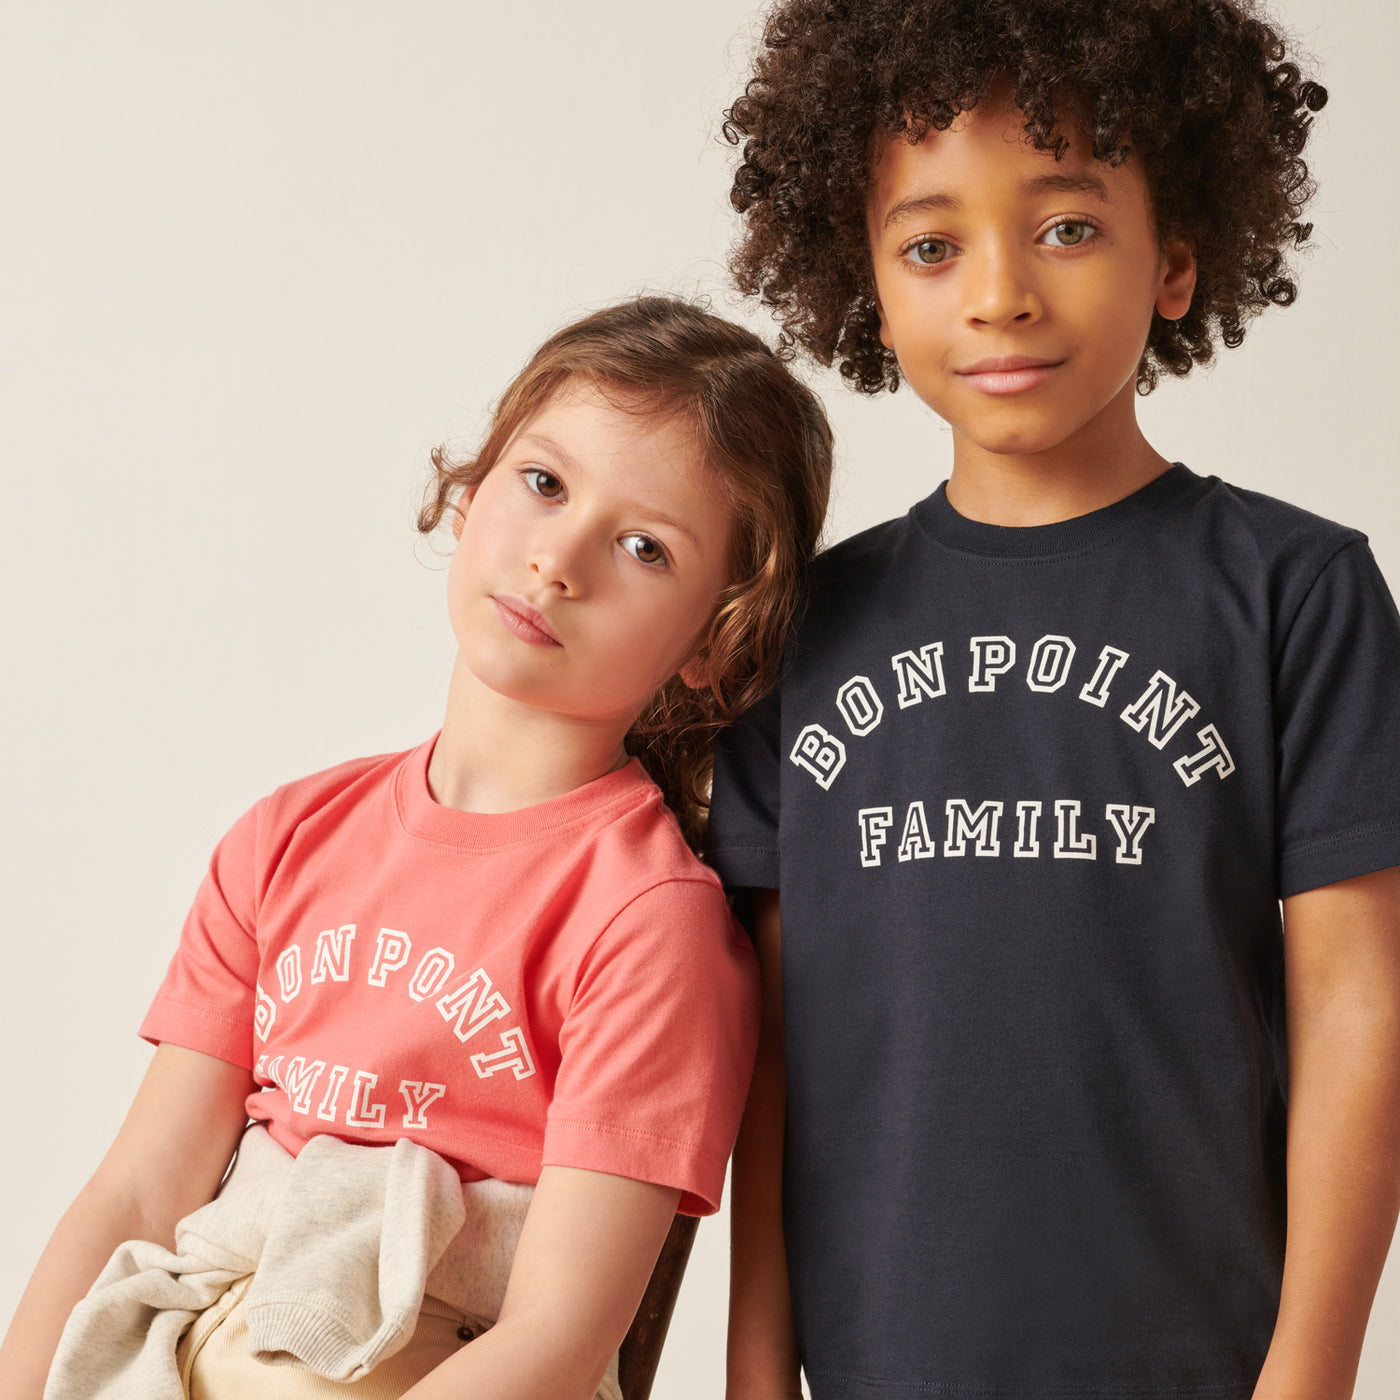 visuel mixte enfant garçon fille t-shirt Bonpoint Family